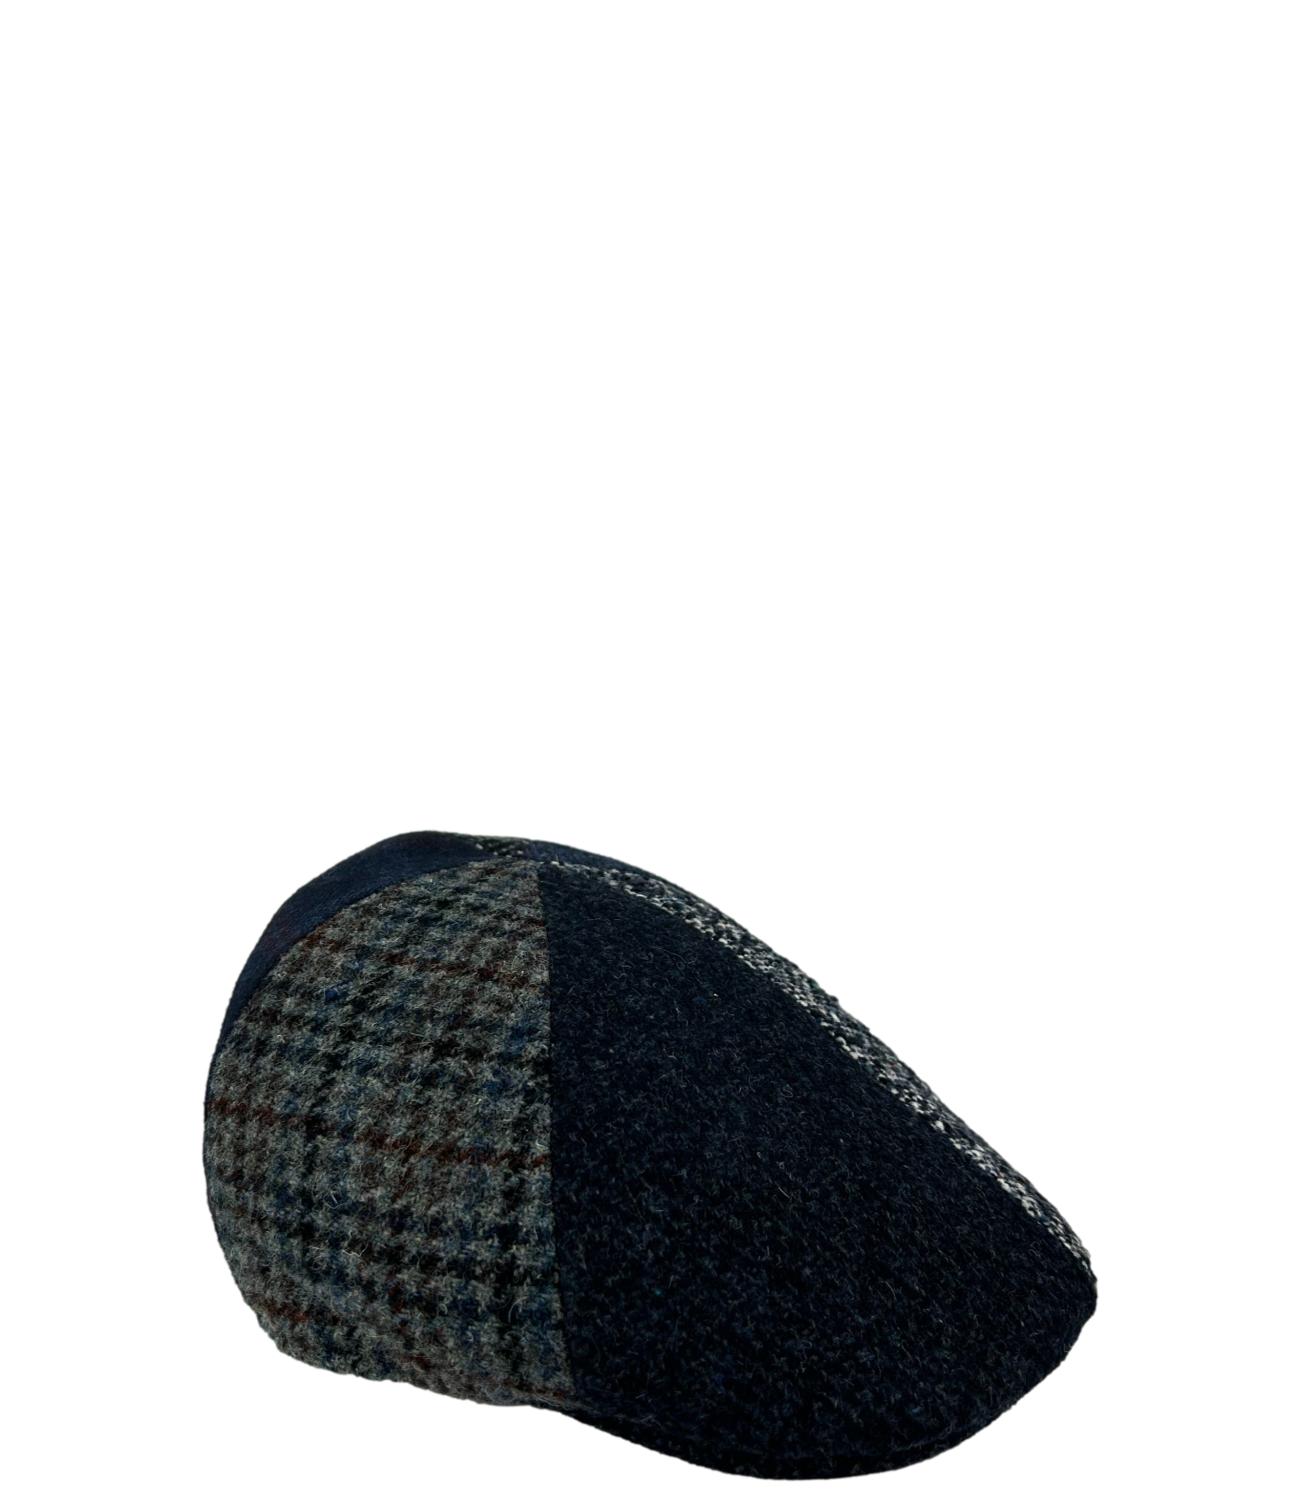 Men's stick cap in blue checked wool and herringbone pattern